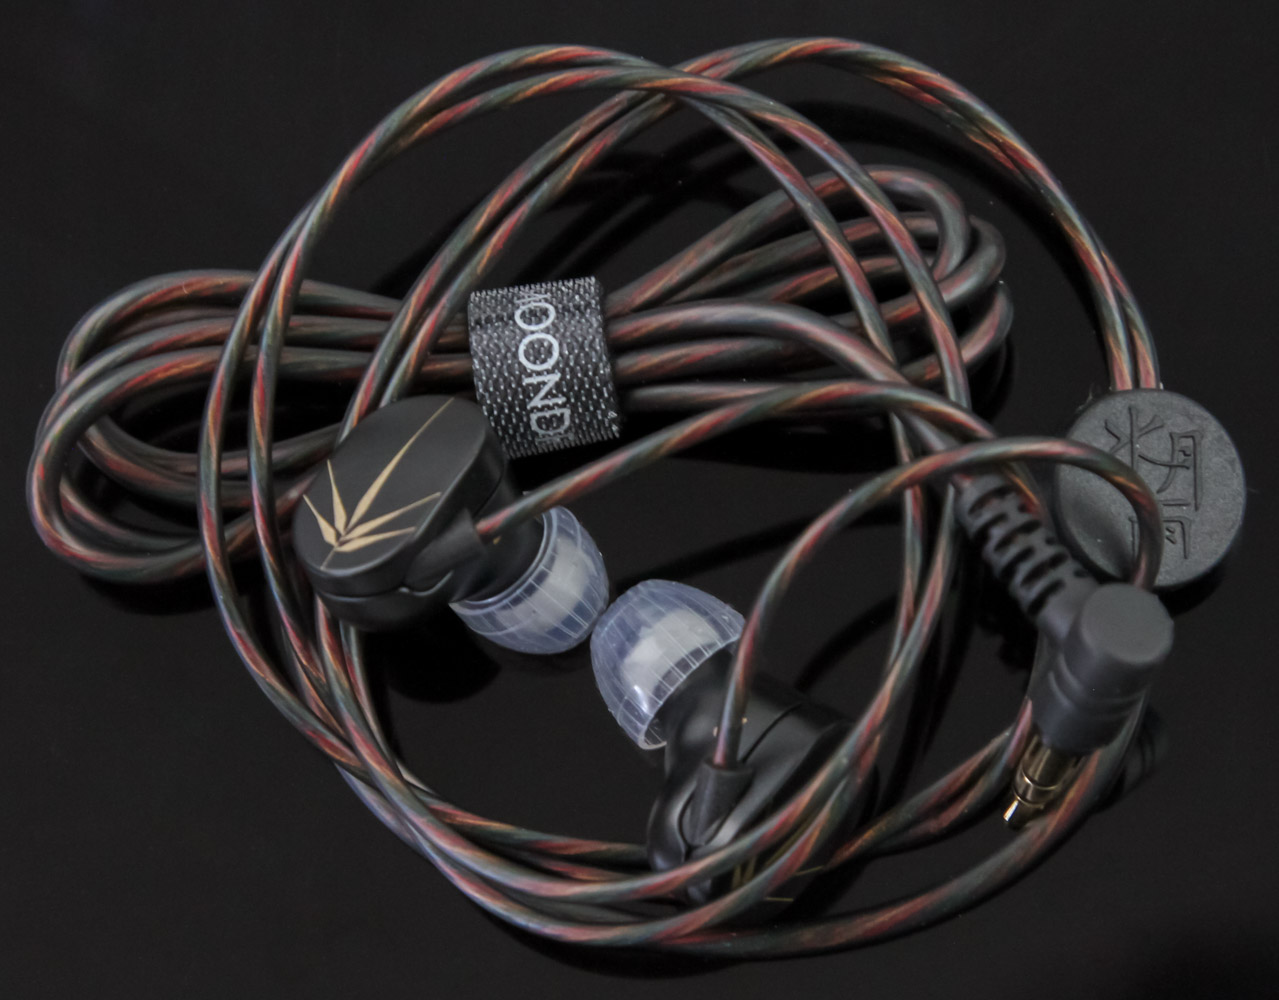 MOONDROP Chu In-Ear Monitors Review - $20 ticket to Hi-Fi Audio